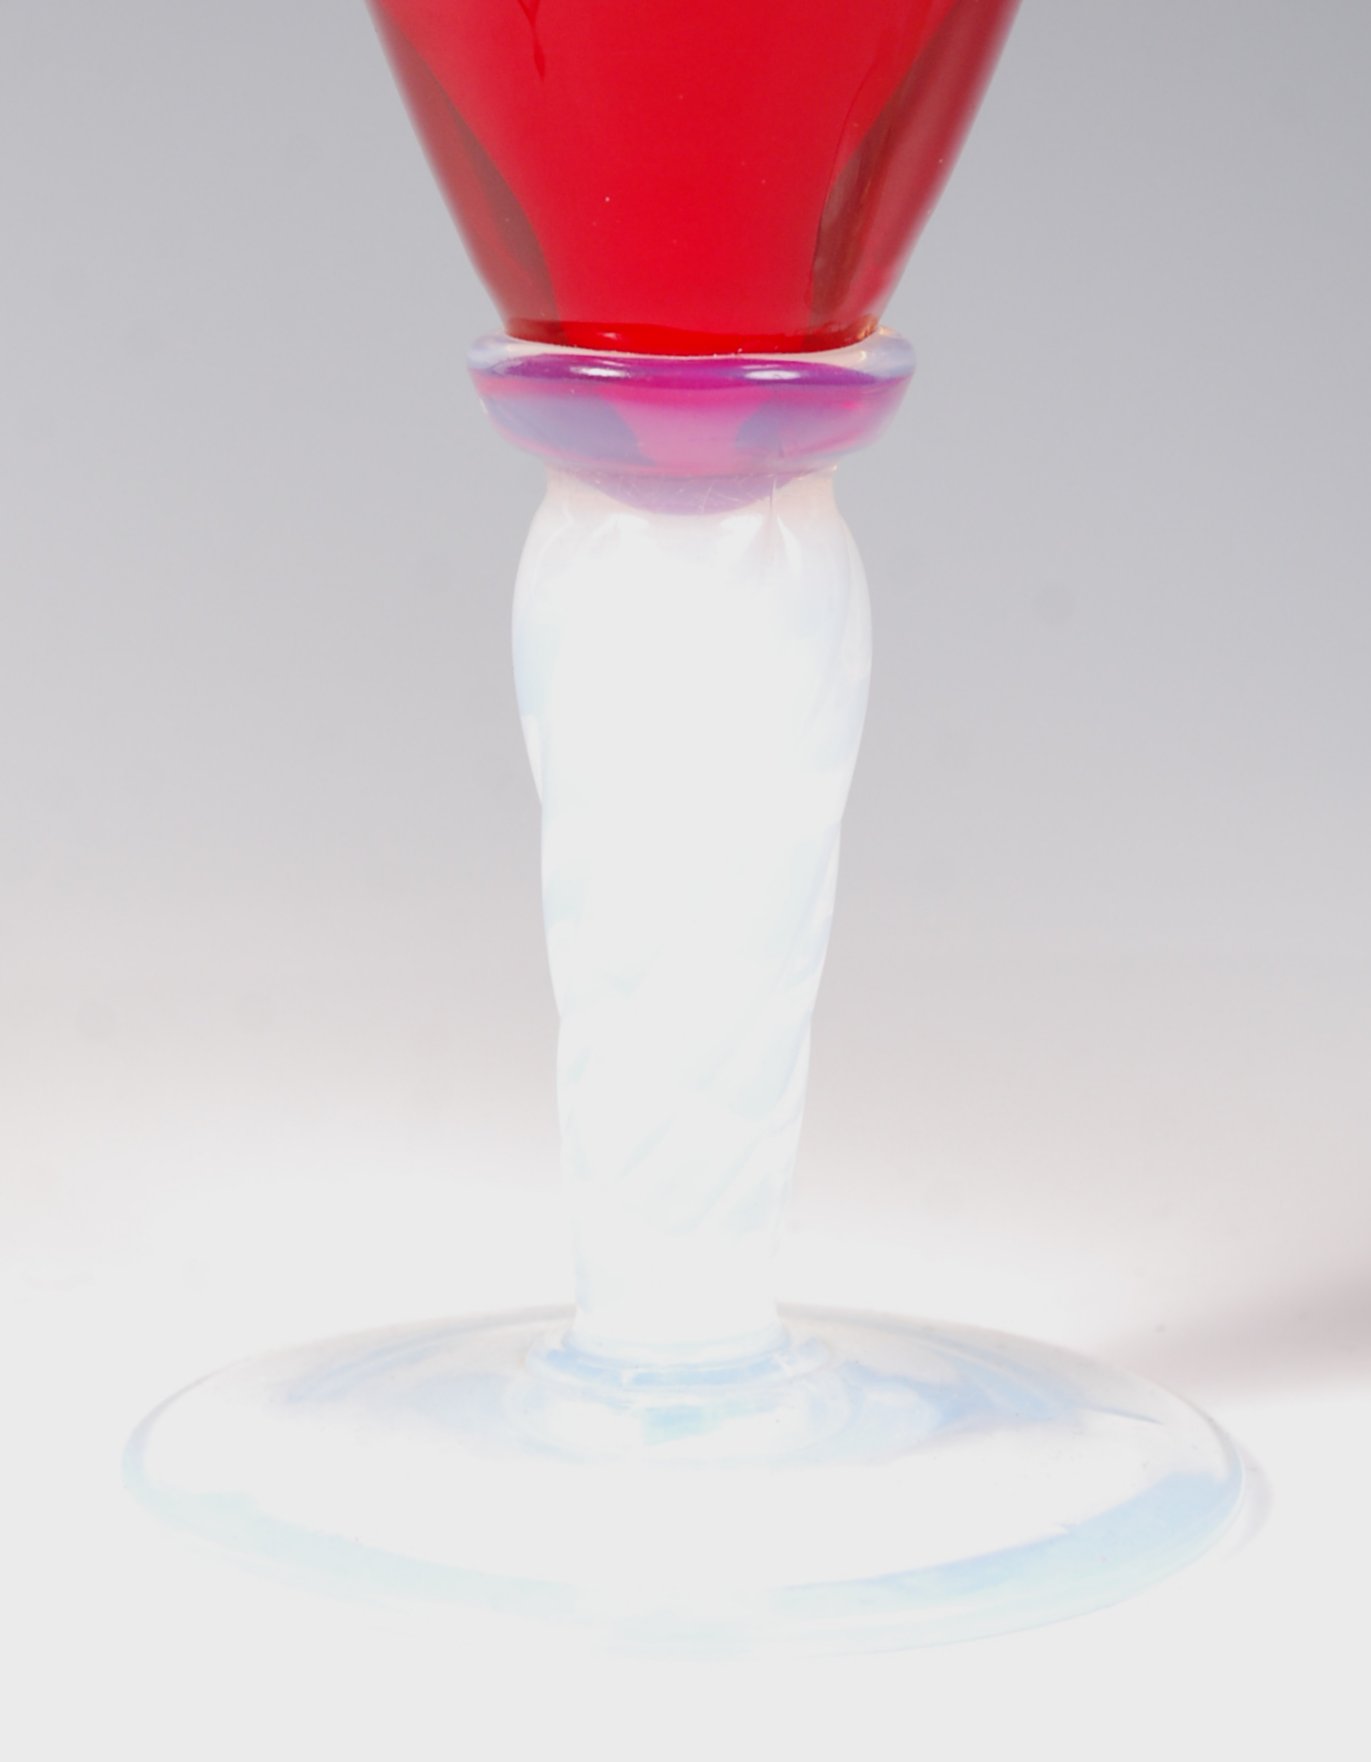 VINTAGE ITALIAN STUDIO ART GLASS HOURGLASS PEDESTA - Image 4 of 5